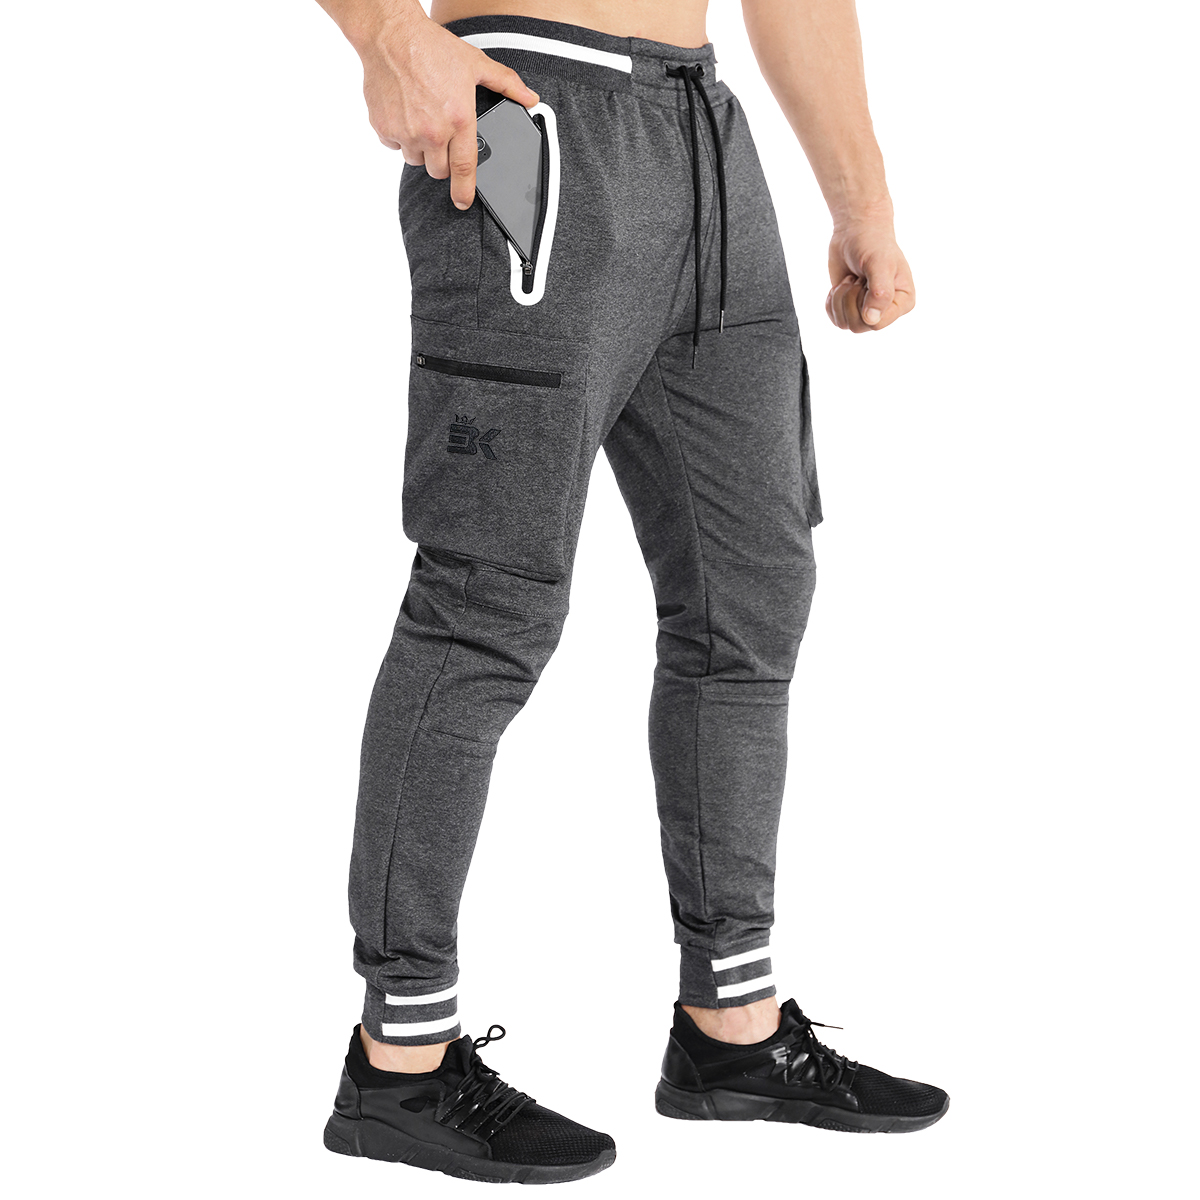  BROKIG MensJogger Sport Pants,Casual Zipper Gym Workout  Sweatpants Pockets